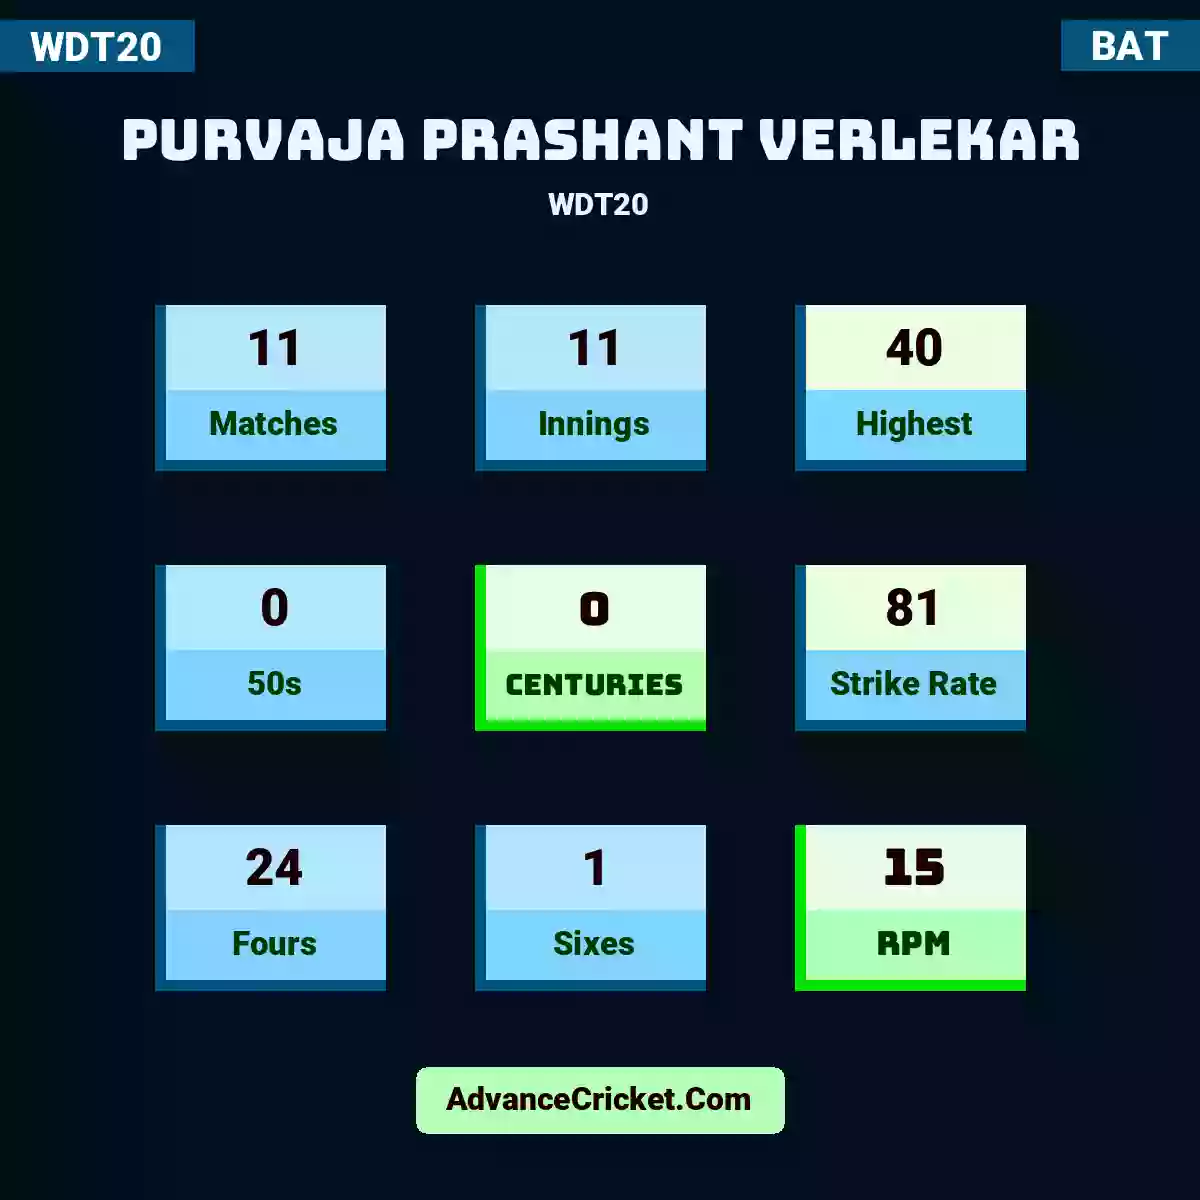 Purvaja Prashant Verlekar WDT20 , Purvaja Prashant Verlekar played 11 matches, scored 40 runs as highest, 0 half-centuries, and 0 centuries, with a strike rate of 81. P.Prashant.Verlekar hit 24 fours and 1 sixes, with an RPM of 15.